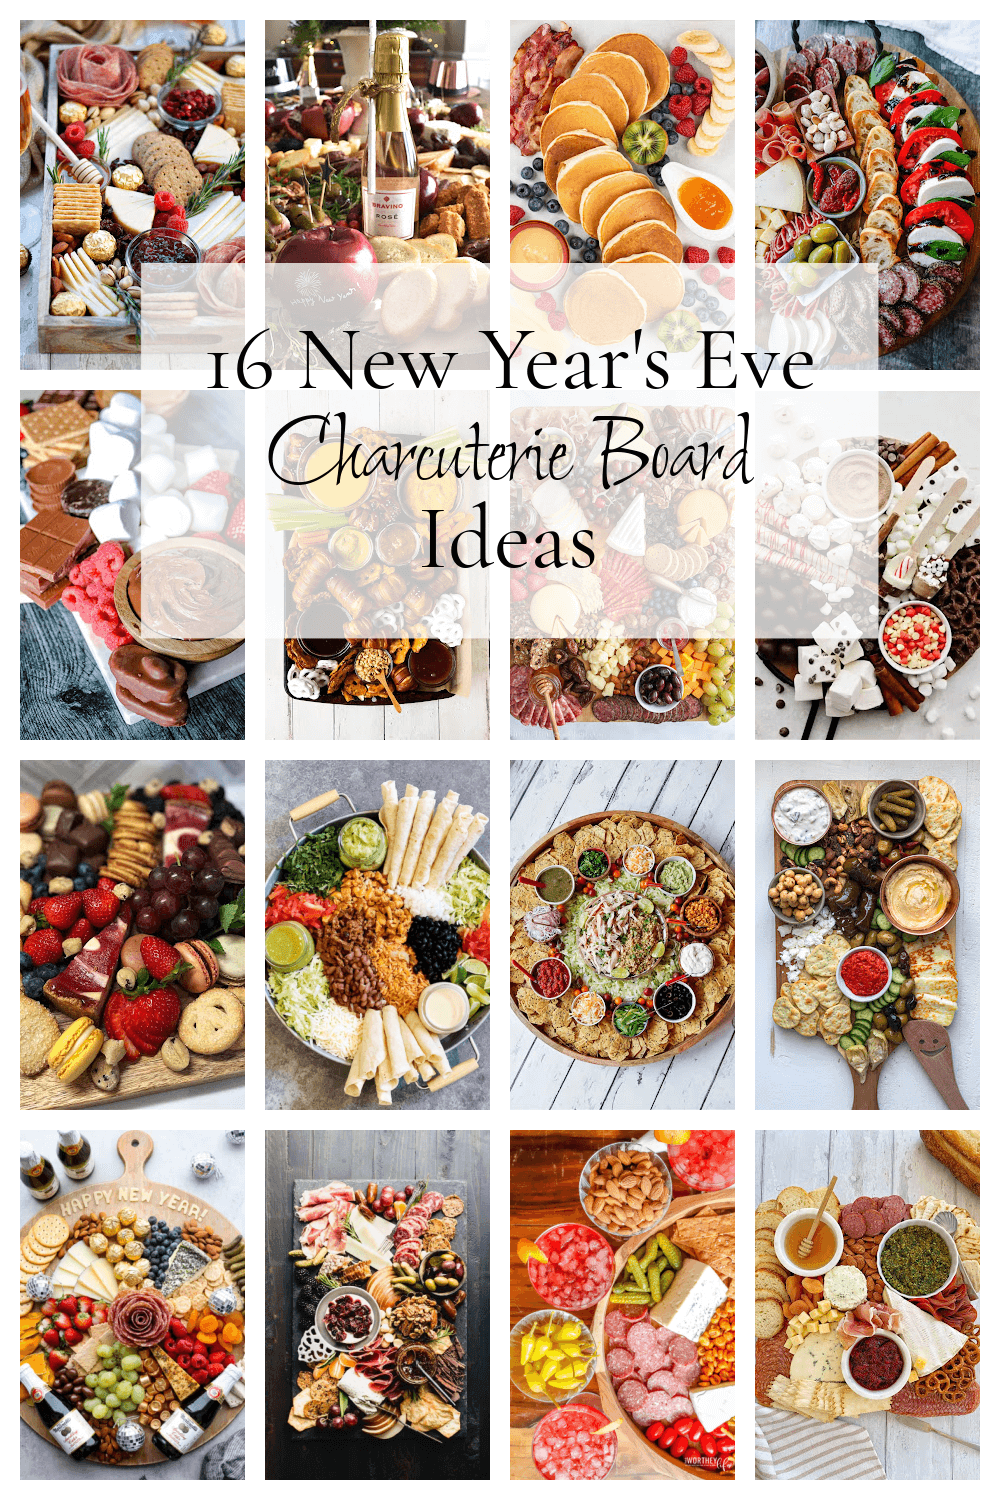 16 New Year’s Eve Charcuterie Board Ideas